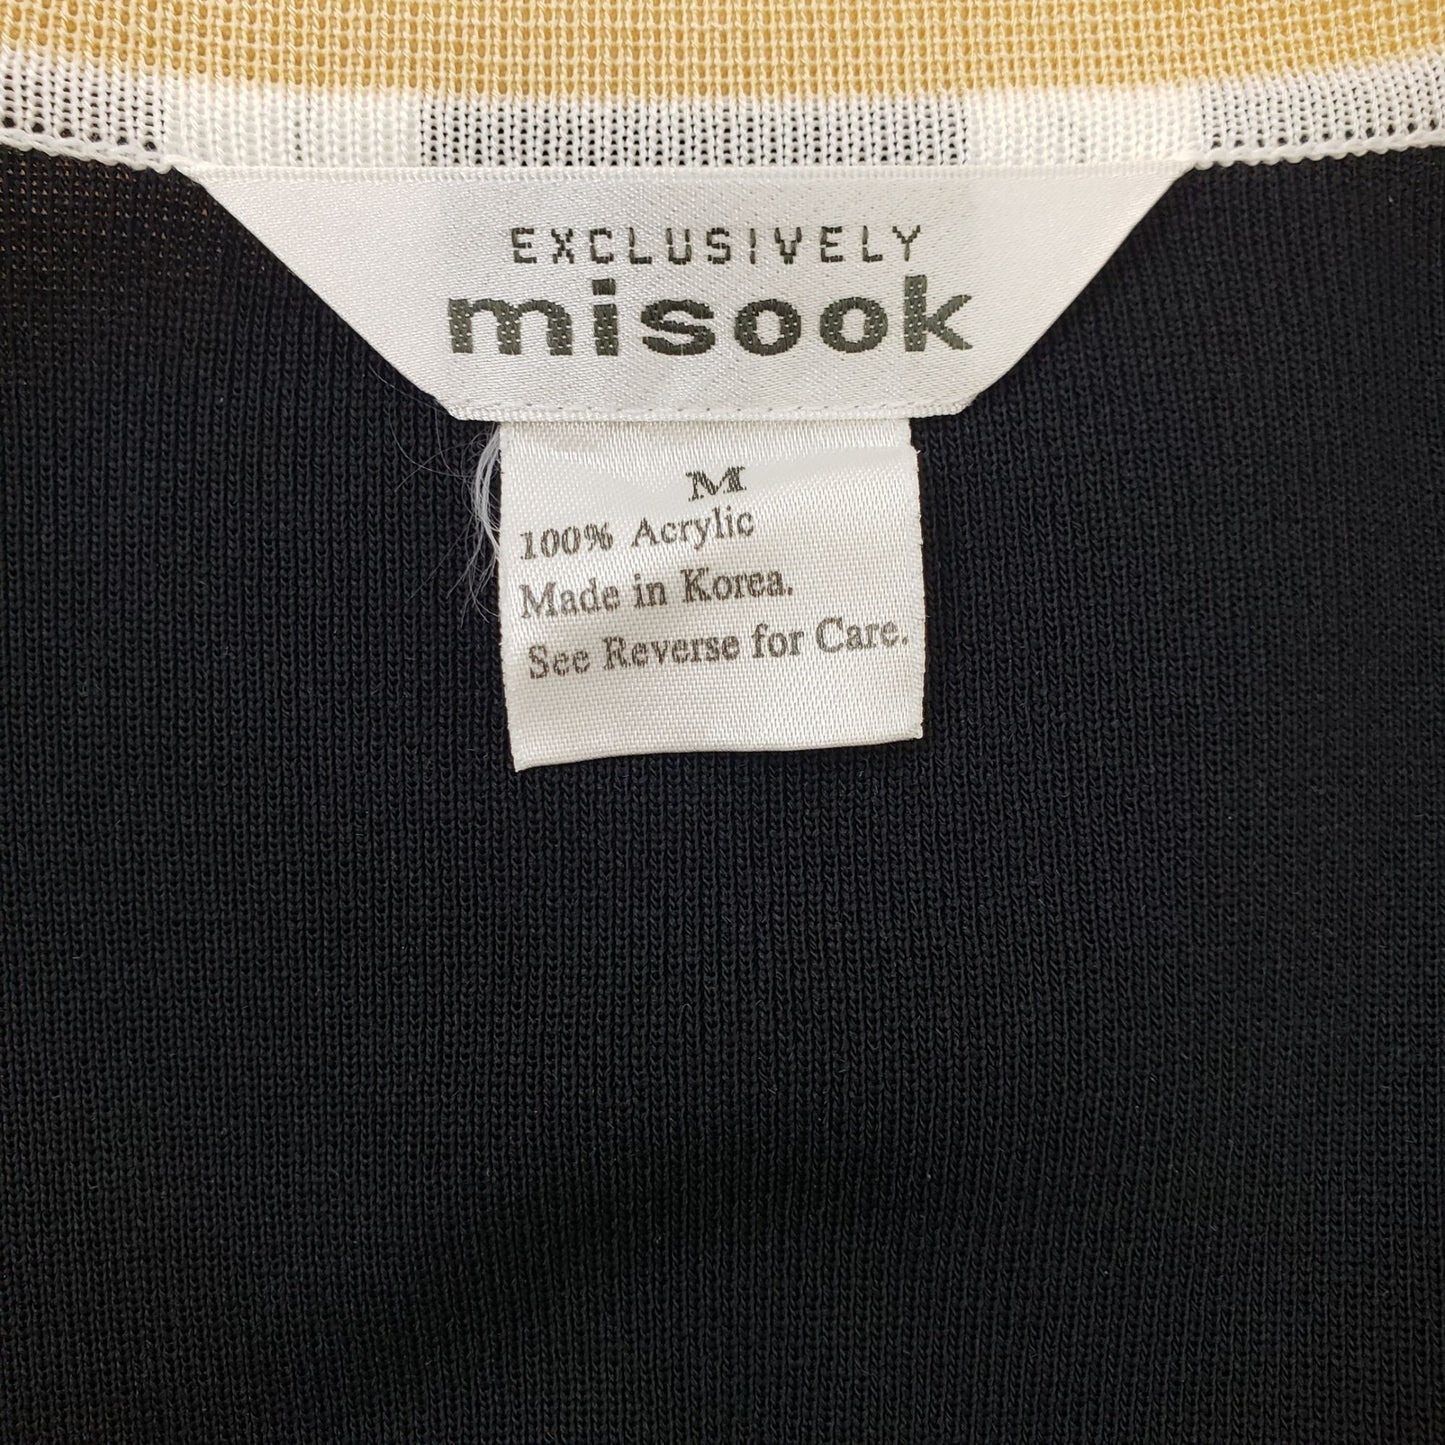 Exclusively Misook Colorblock Open Cardigan Sweater Size Medium